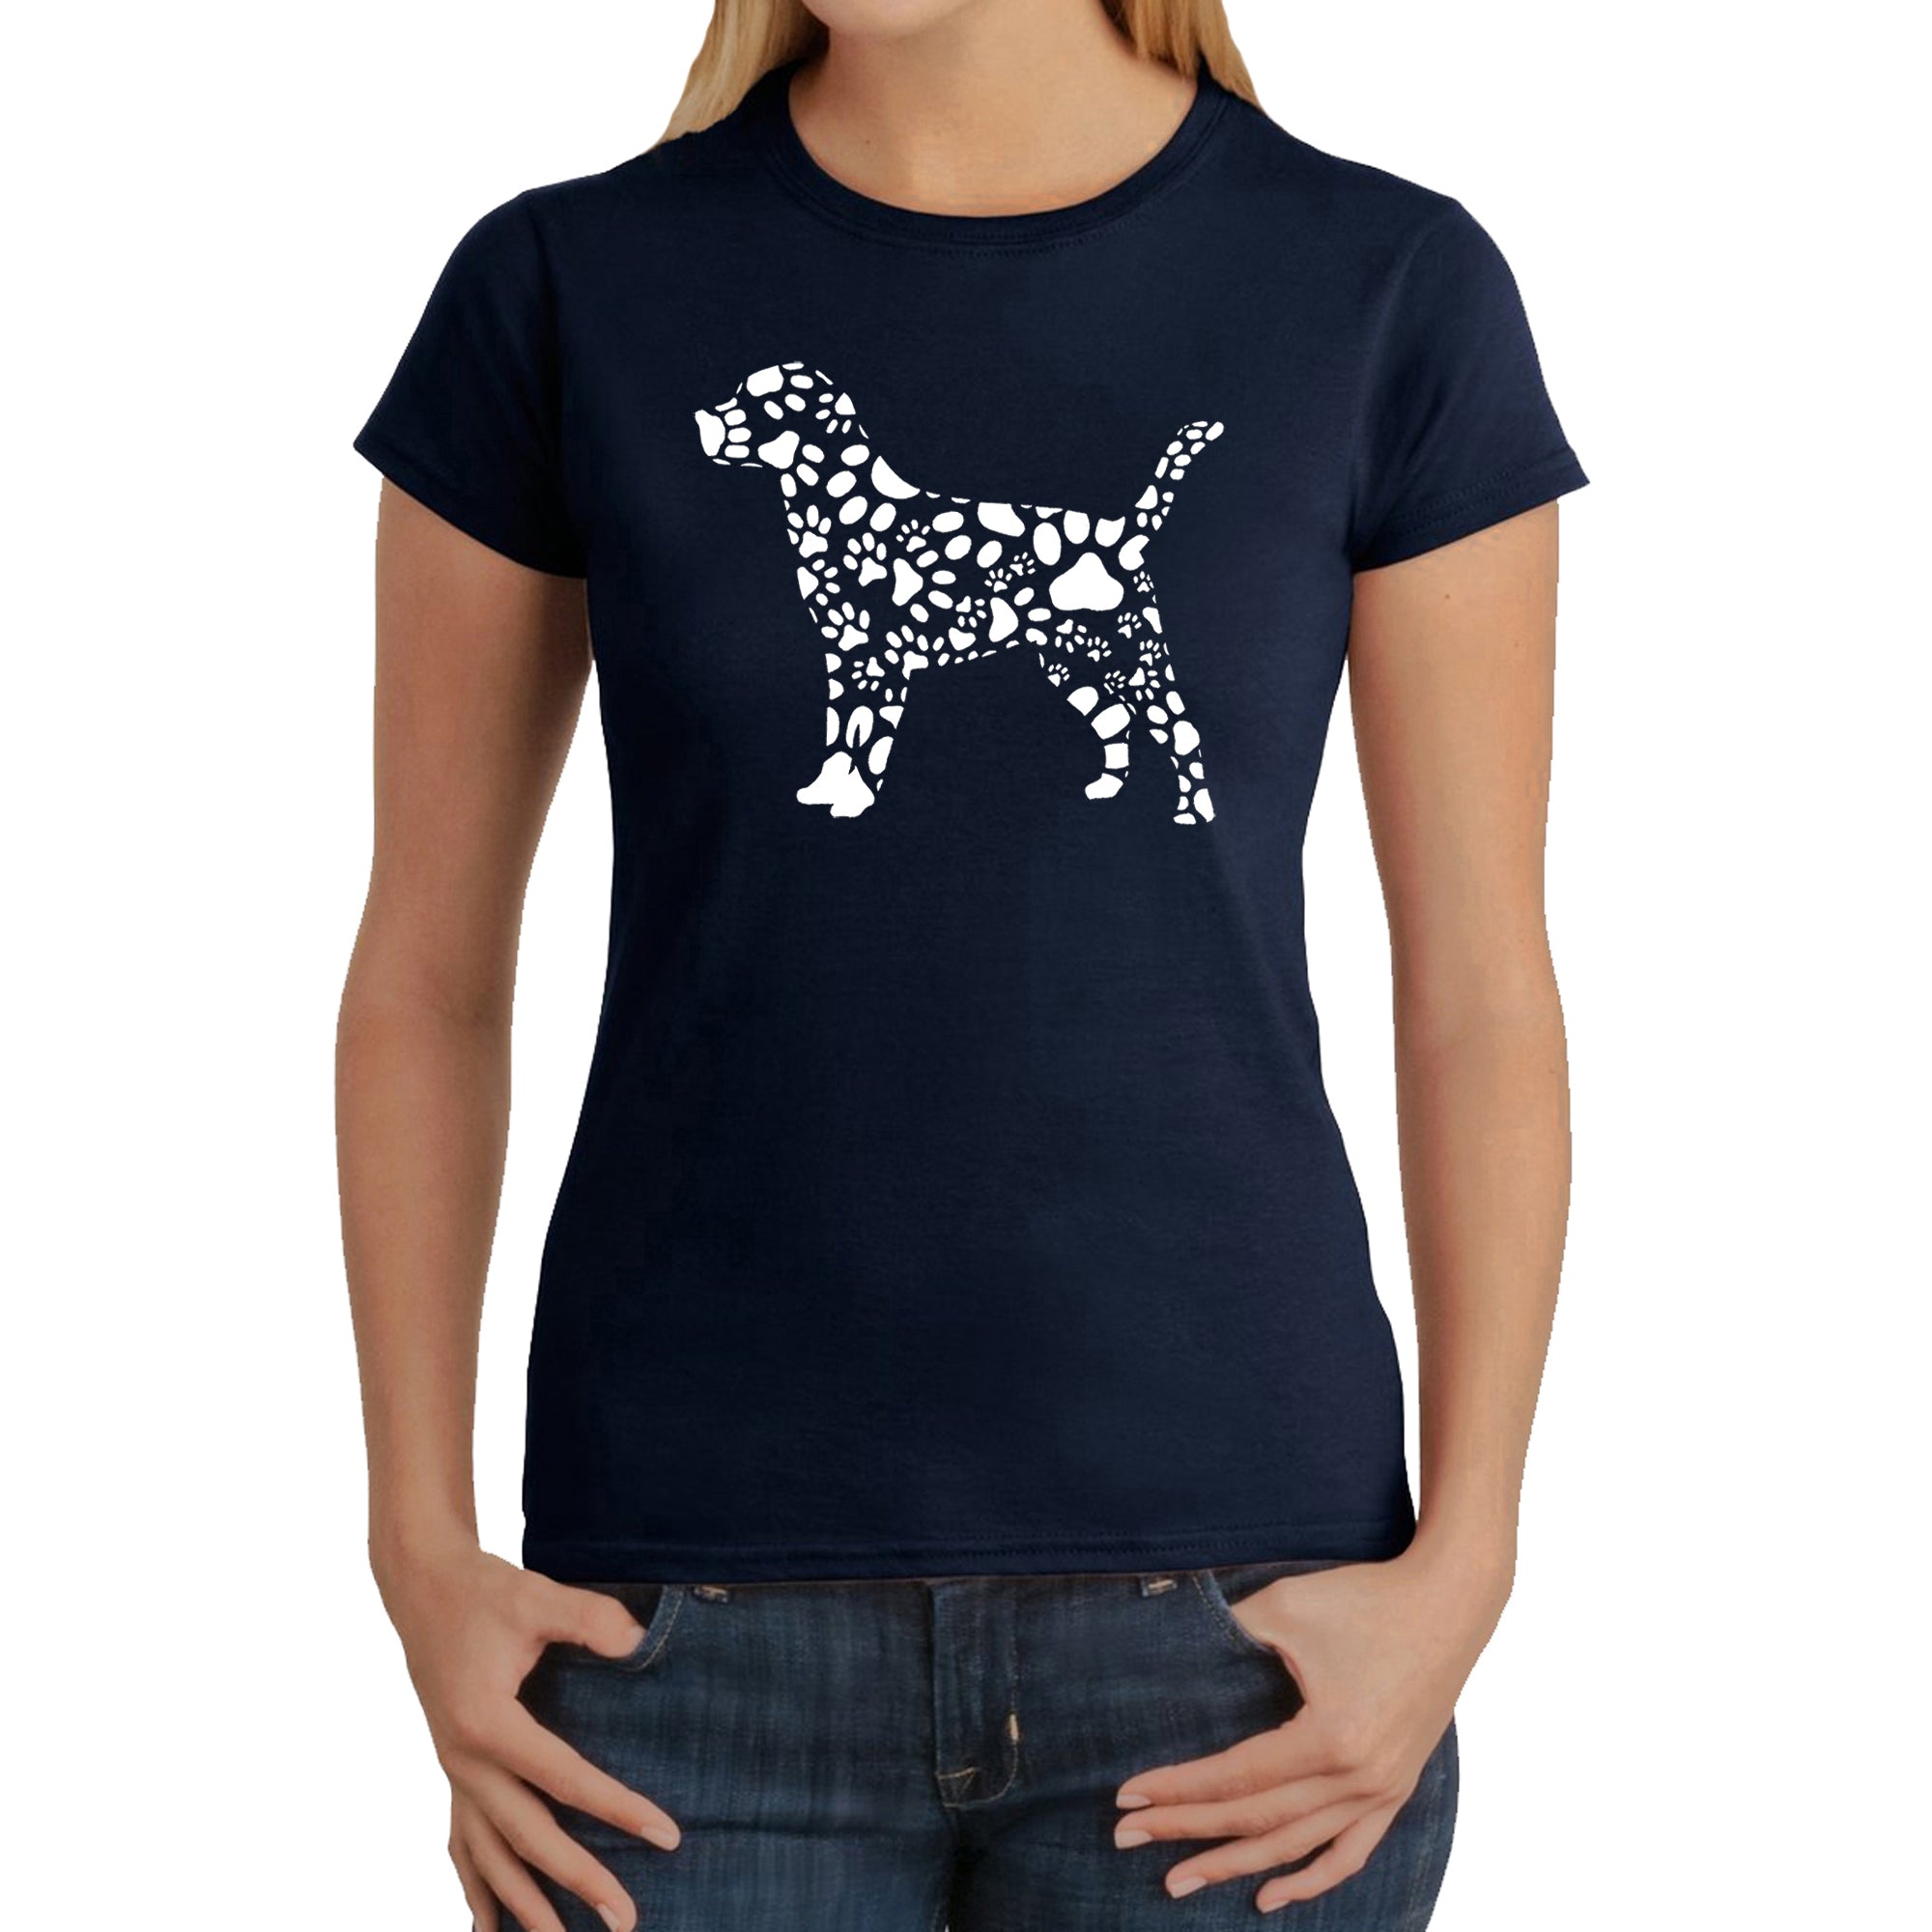 Dog Paw Prints - Women's Word Art T-Shirt - Navy - Medium